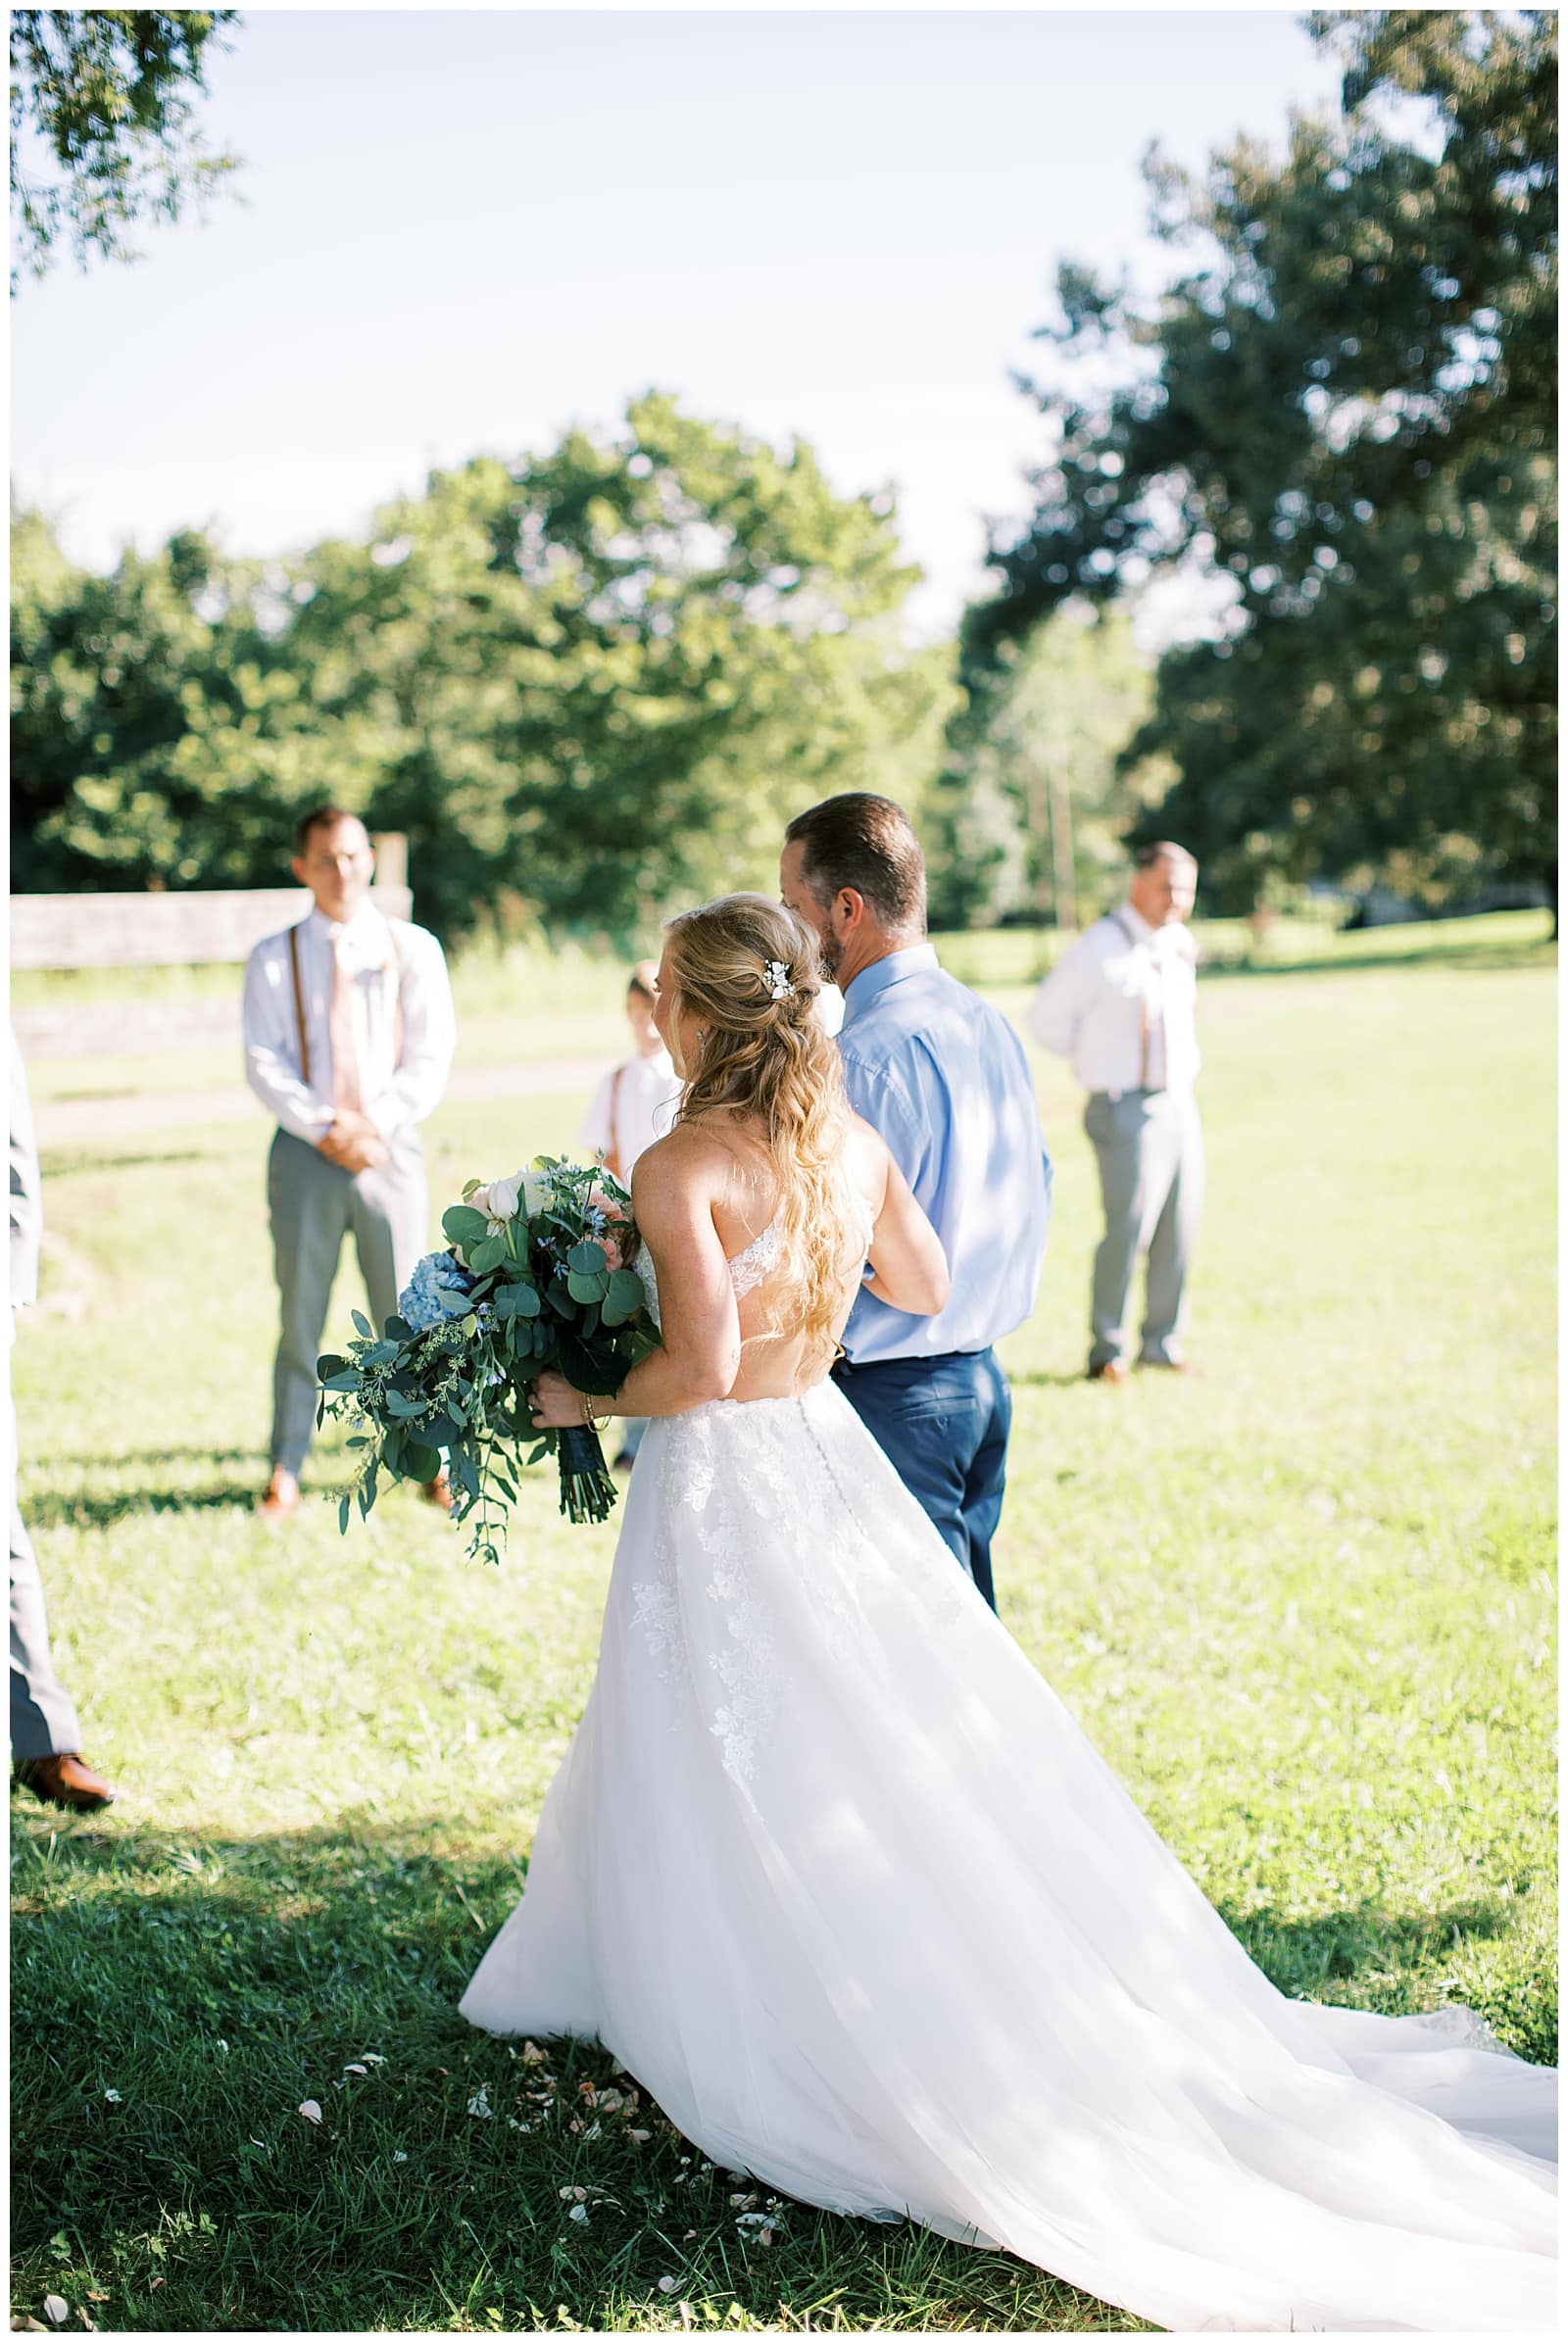 Danielle-Defayette-Photography-Farm-at-Bentley-Fields-Wedding-2020_0035.jpg